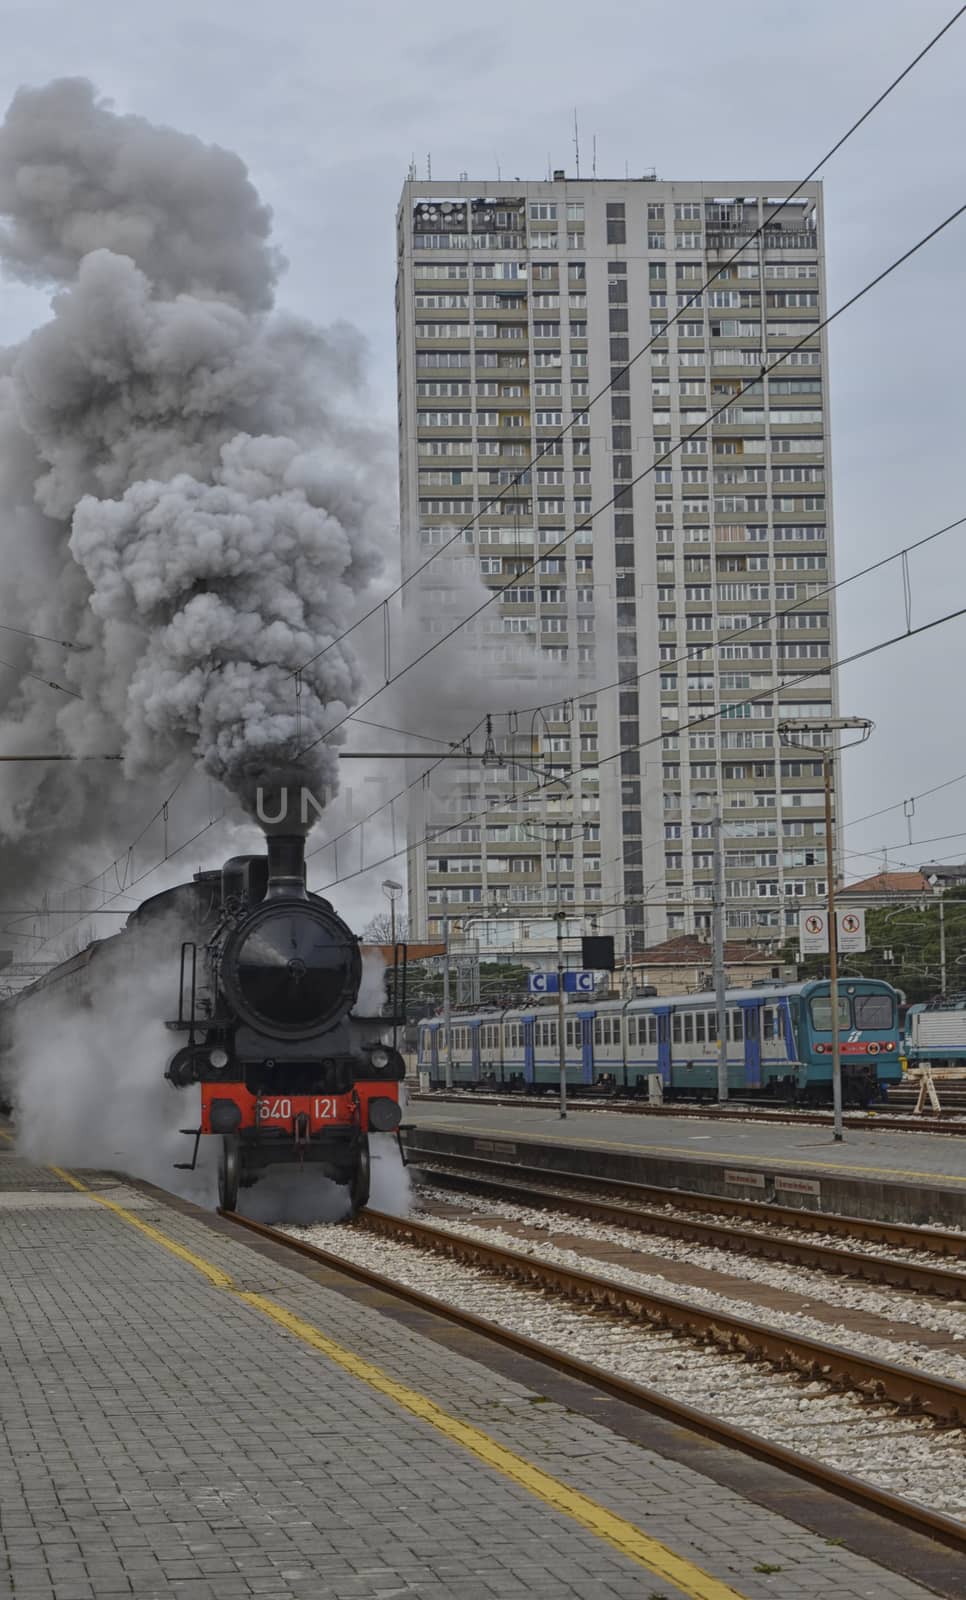 Steam locomotive leaving the station of Rimini by sephirot17